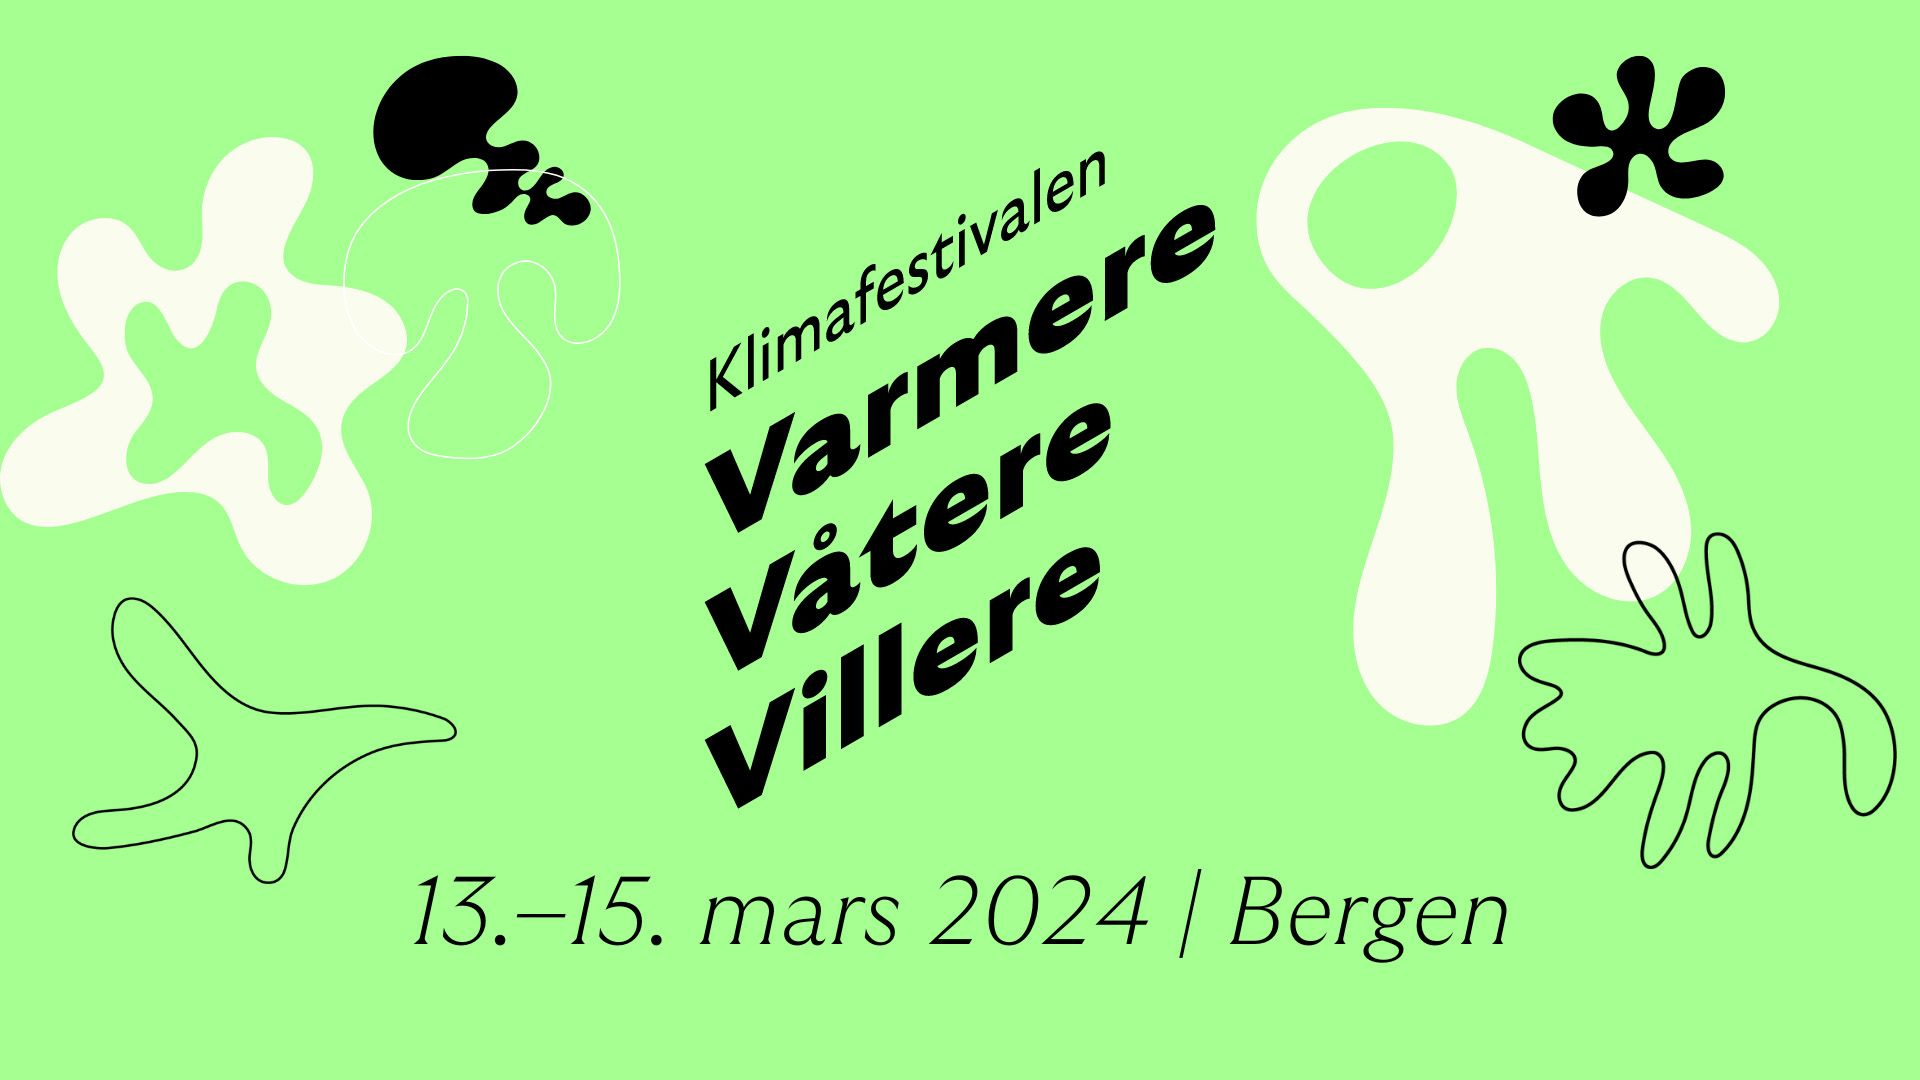 Cover Image for Varmere våtere villere chooses Broadcast as their official app